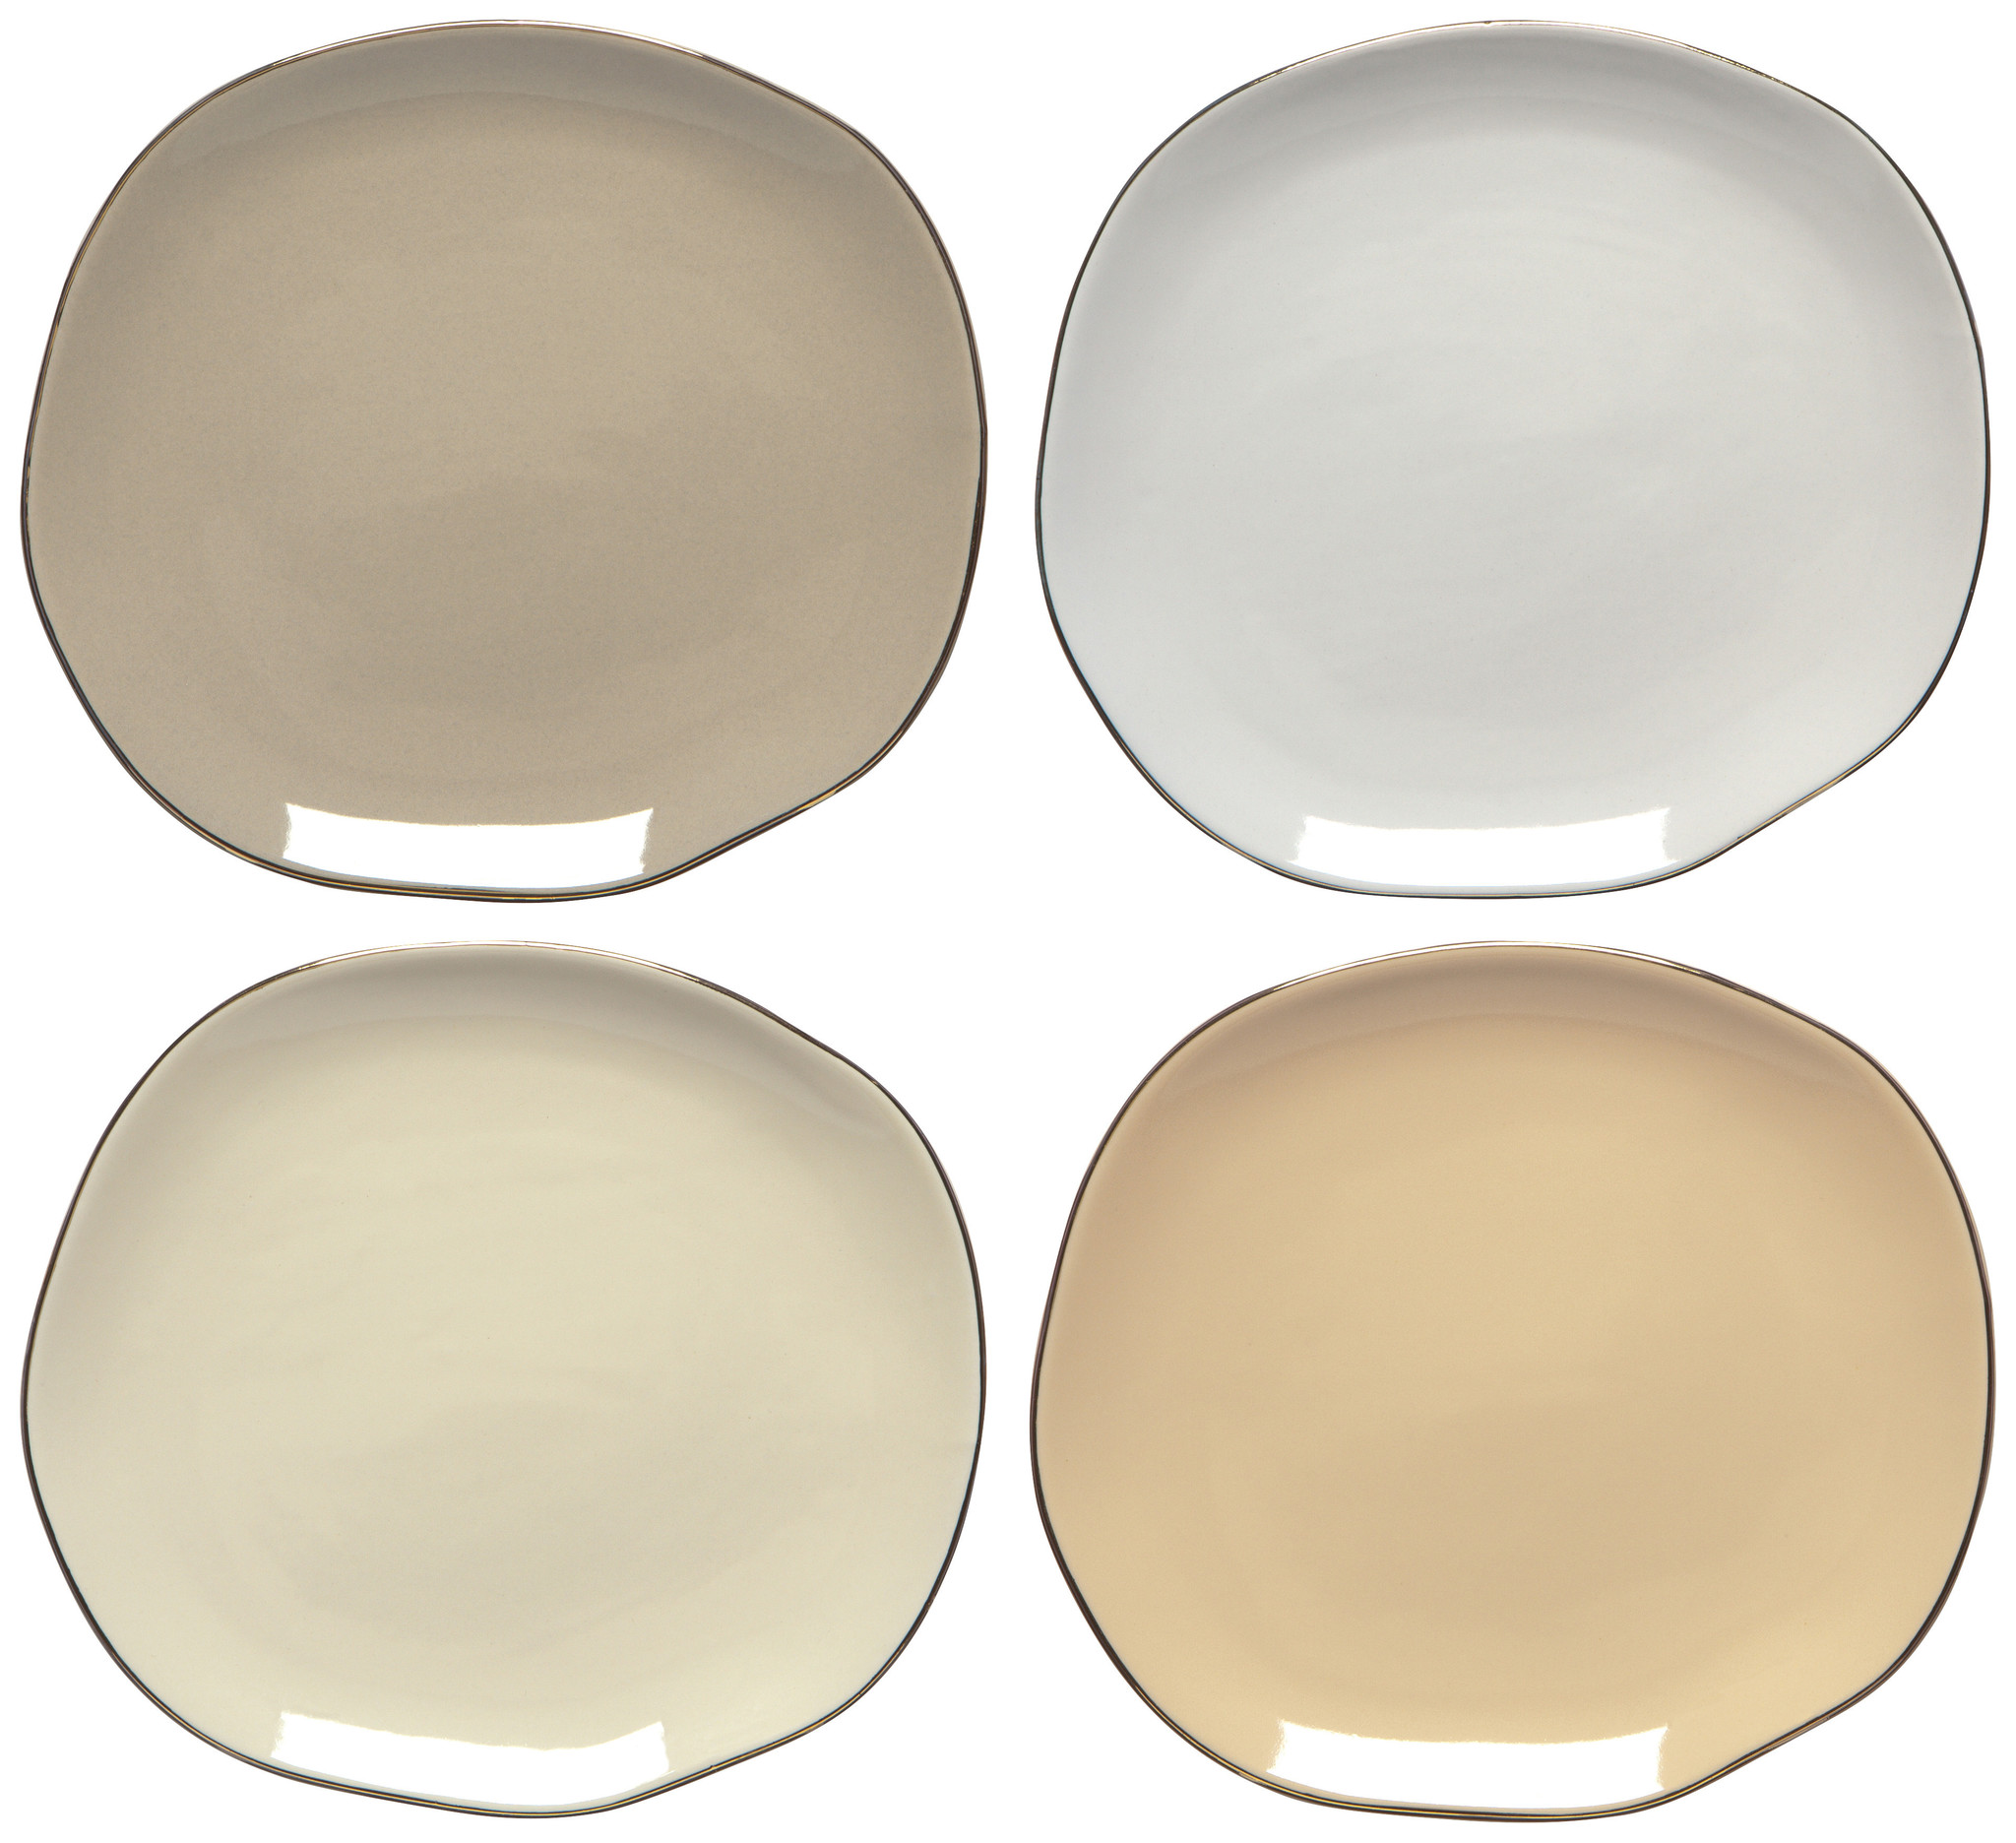 Danica Appetizer Plates - Set of 4  - Pebble